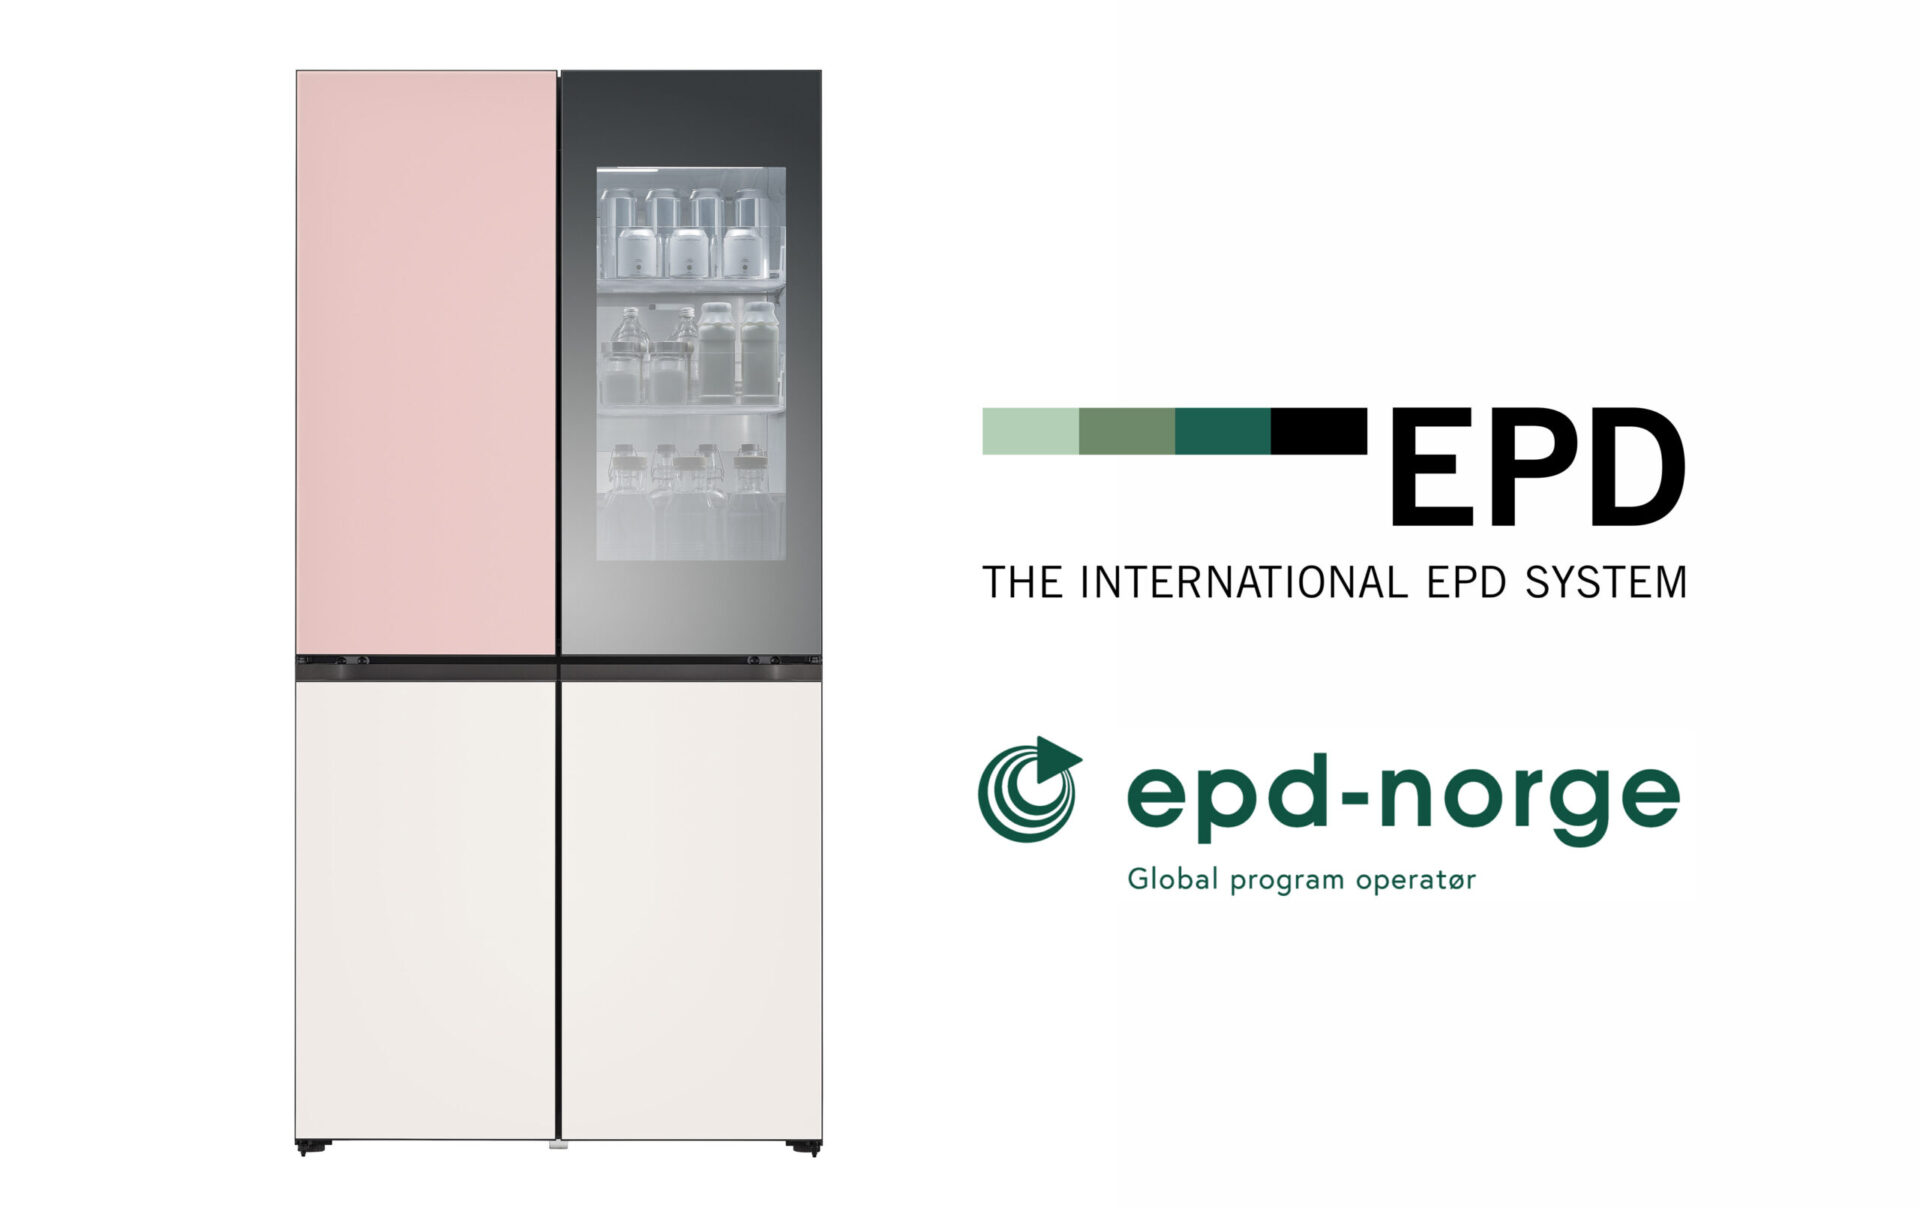 LG전자_인터내셔널EPD인증: LG전자의 프리미엄 냉장고 ‘LG 디오스 오브제컬렉션 냉장고(사진)’가 최근 대표적인 글로벌 환경성적표지(Environmental Product Declaration, EPD) 인증인 ‘인터내셔널 EPD’를 획득했다